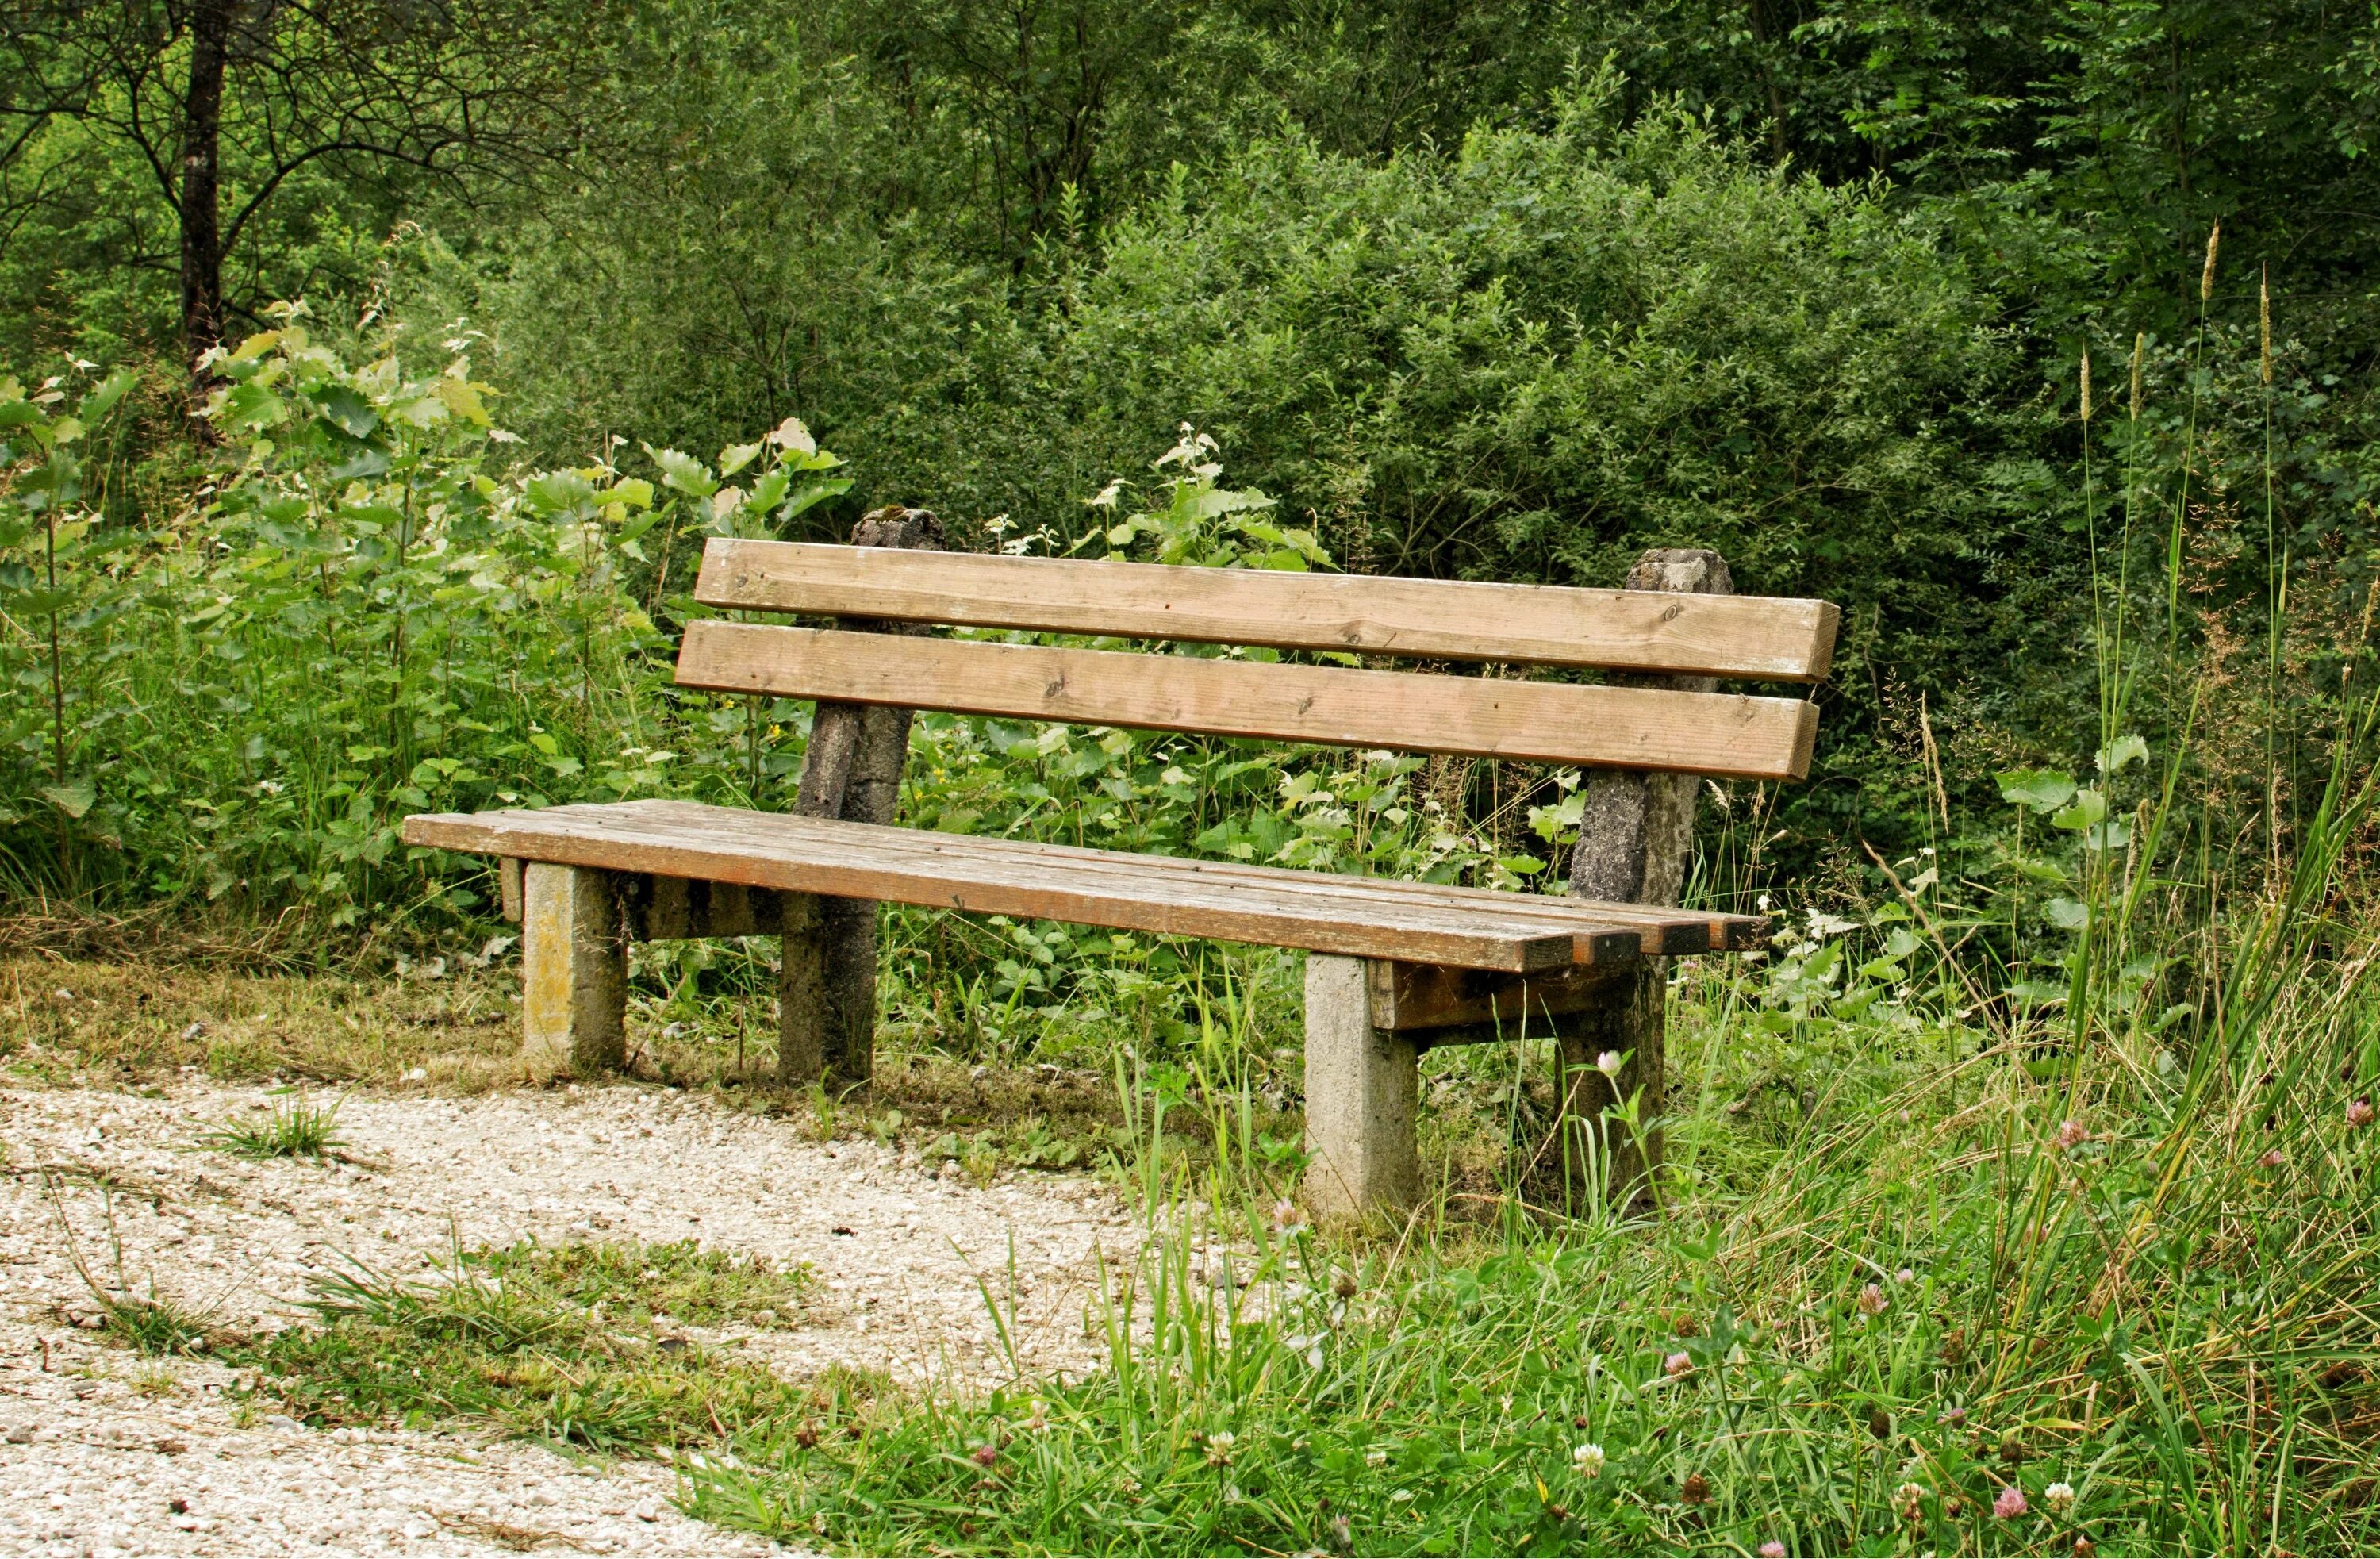 Sit bank. Скамейка Wood Bench. Bench [бенч] — скамейка. Лавочка в парке. Скамейка в лесу.